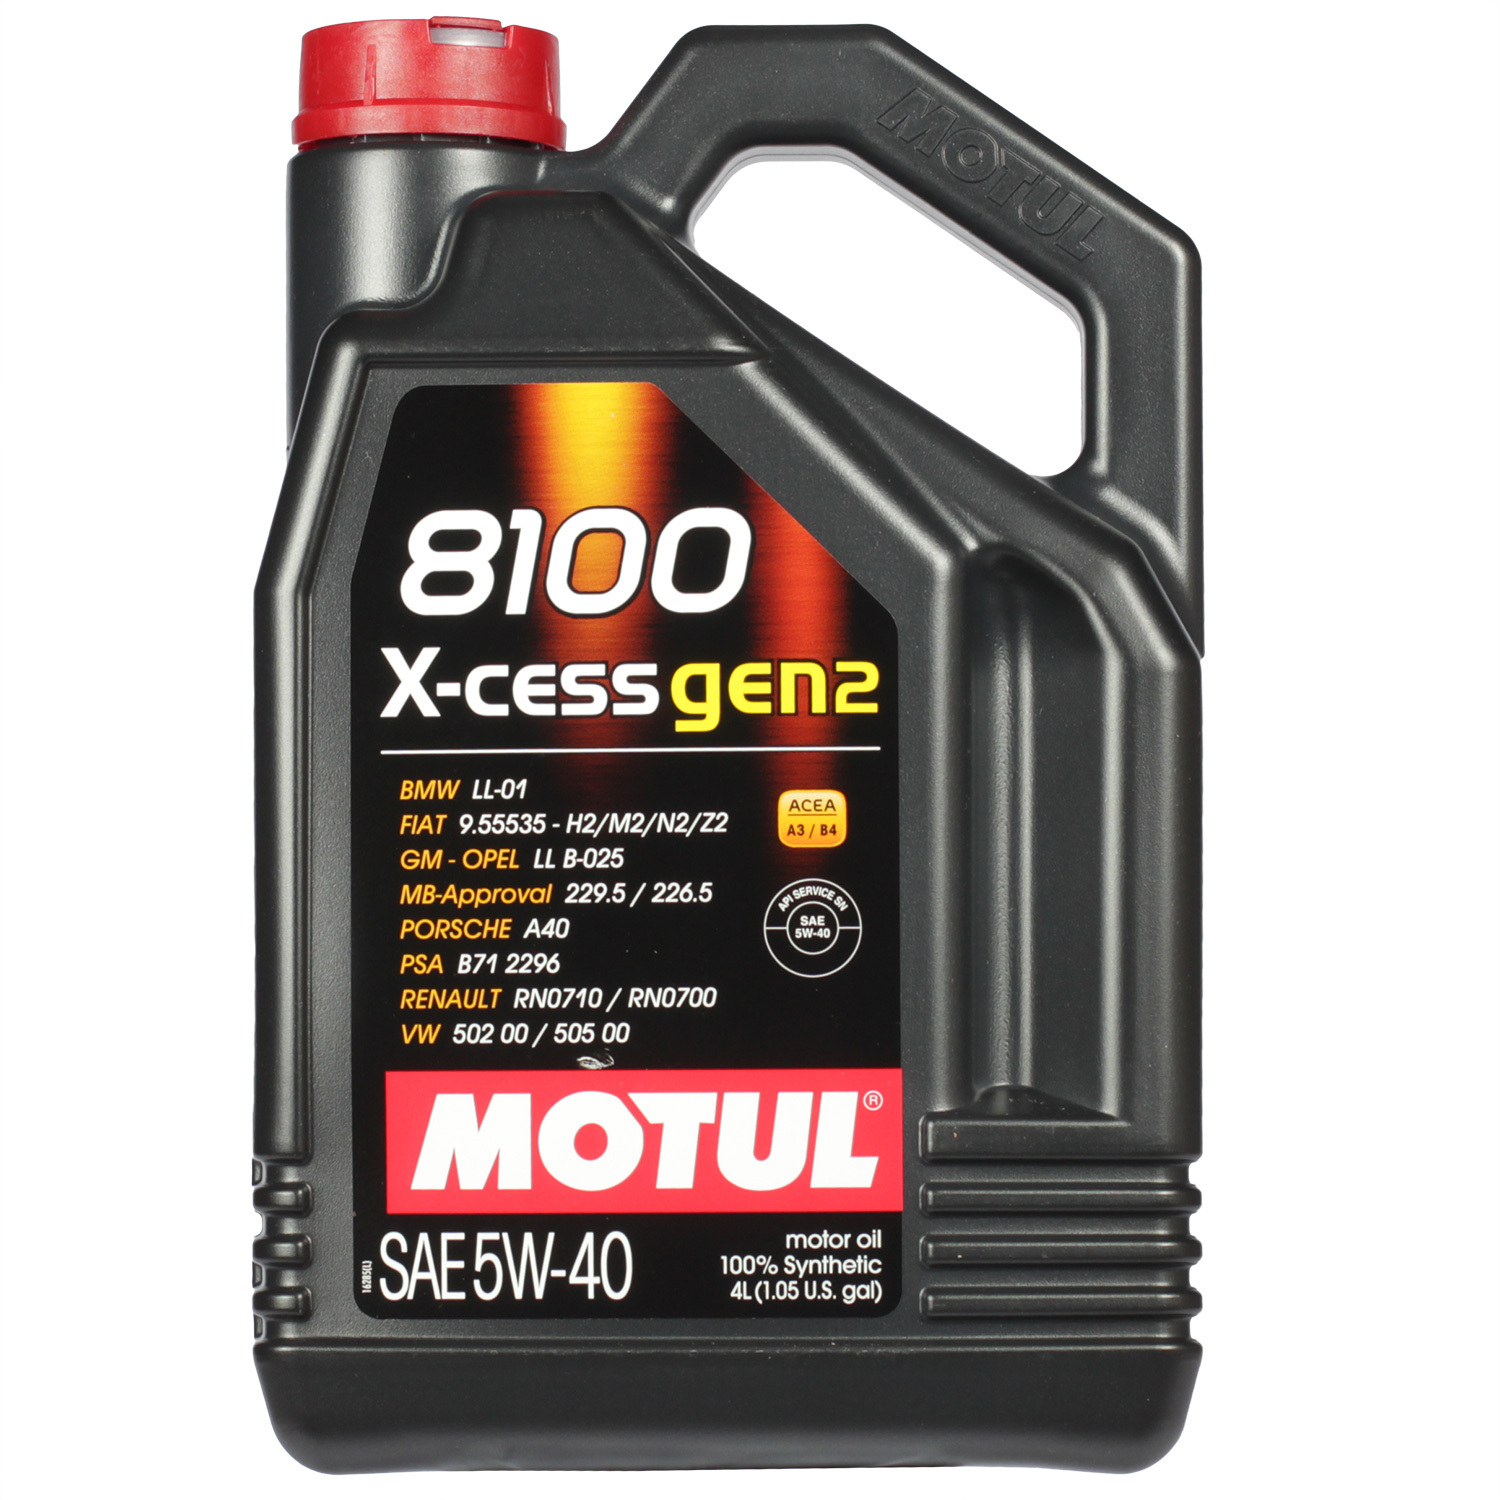 Motul Моторное масло Motul 8100 X-cess gen2 5W-40, 4 л цена и фото